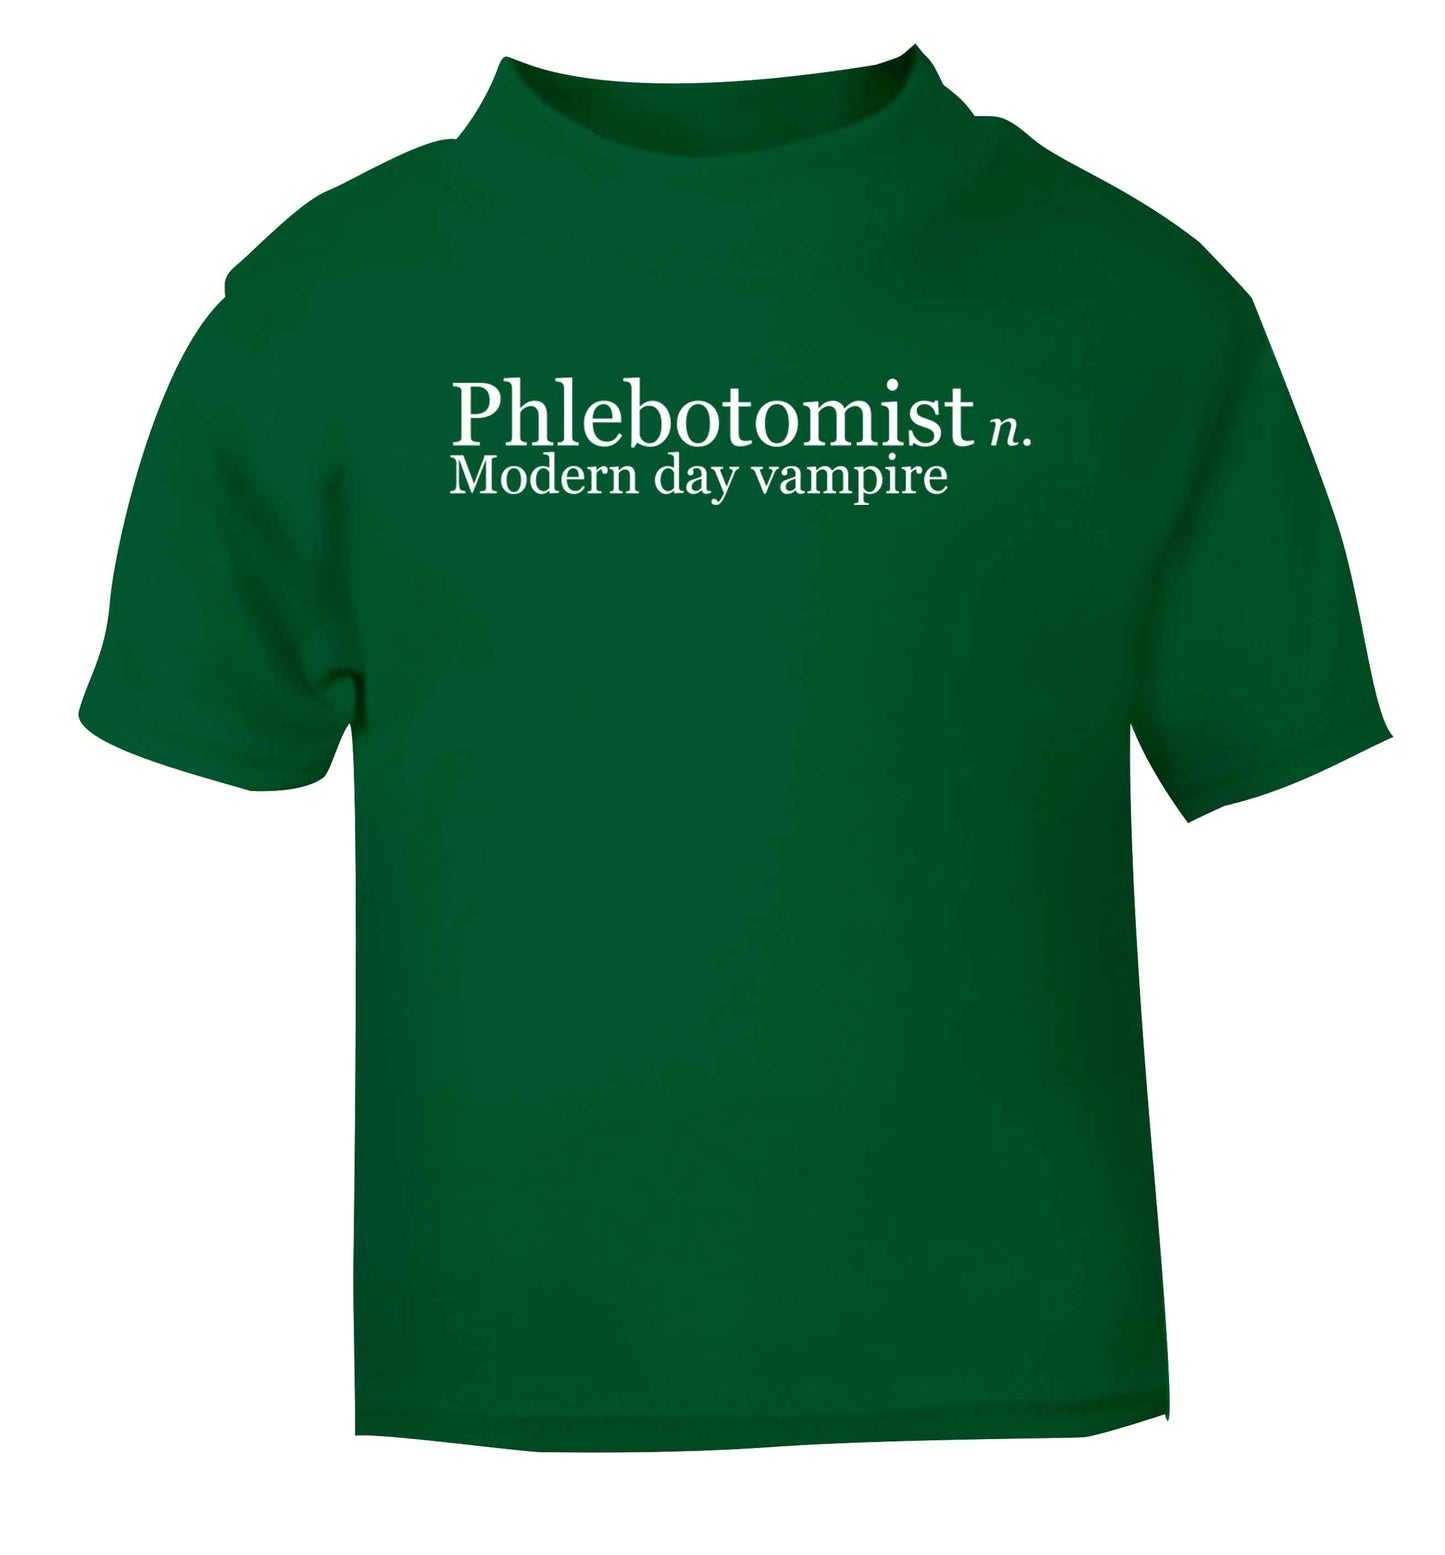 Phlebotomist - Modern day vampire green baby toddler Tshirt 2 Years